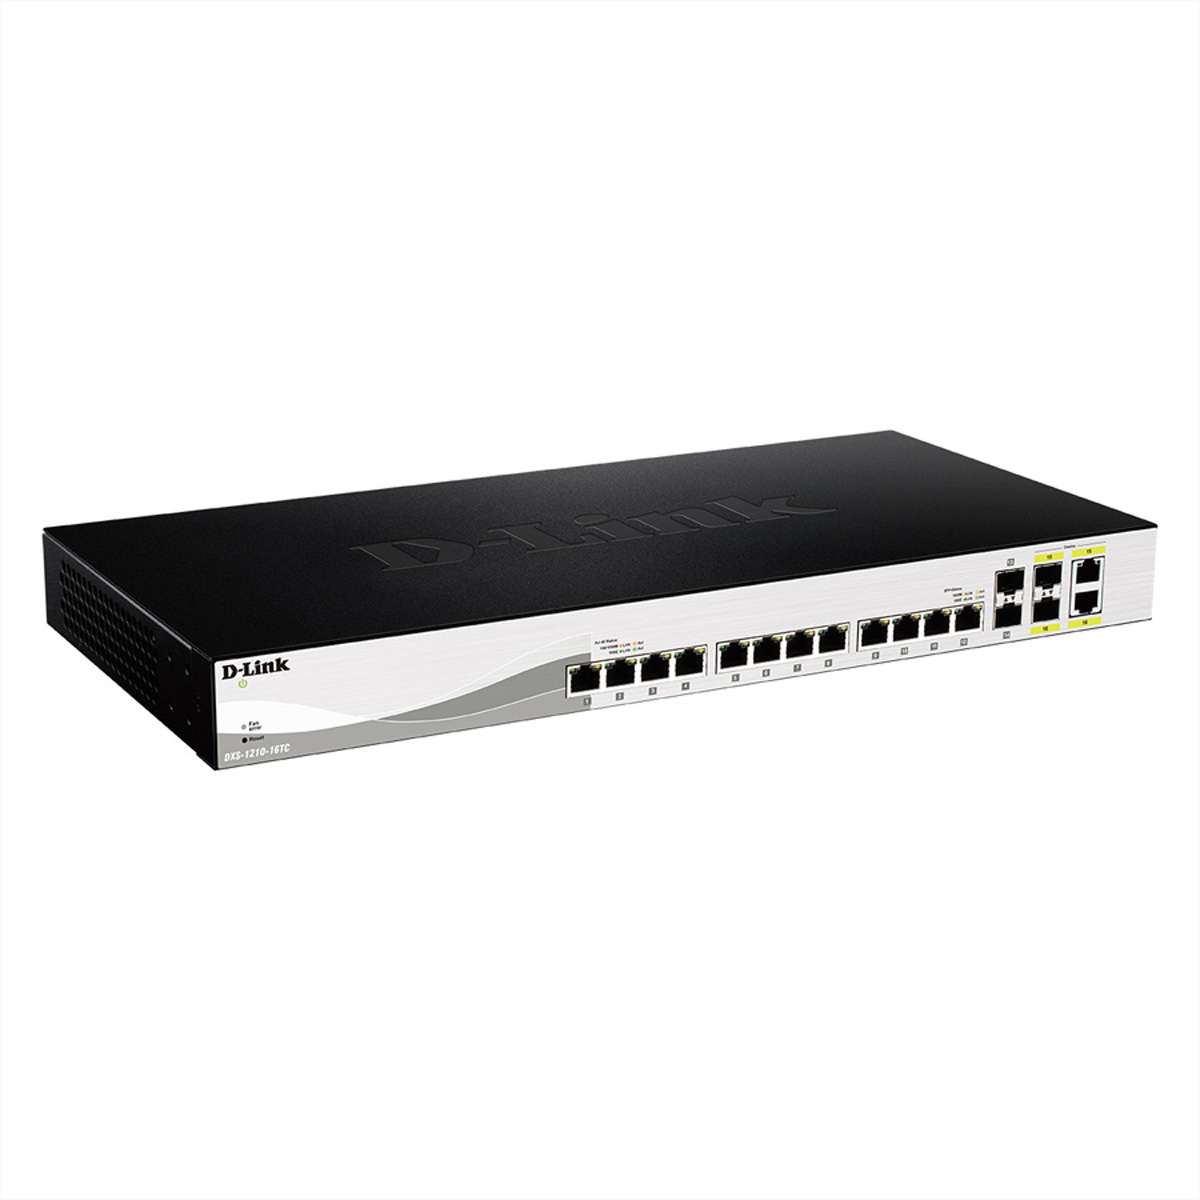 D-LINK DXS-1210-16TC 16-Port Switch 2x 10G Smart Ethernet Managed SFP+ Combo Switch 2x Gigabit